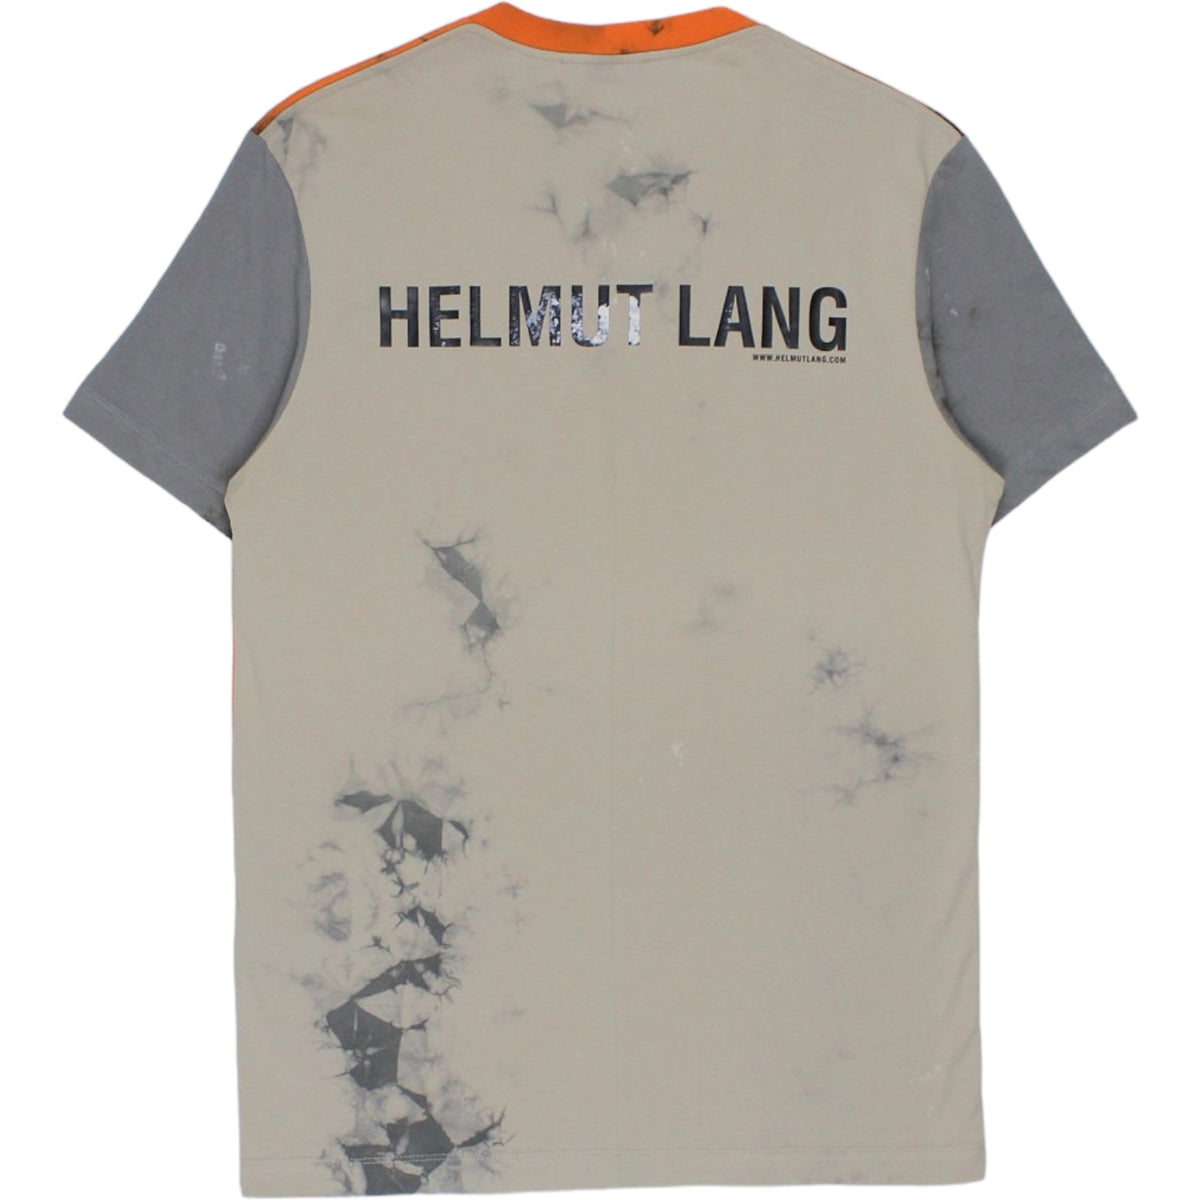 Helmut Lang Orange/Grey Tie Dye T-Shirt